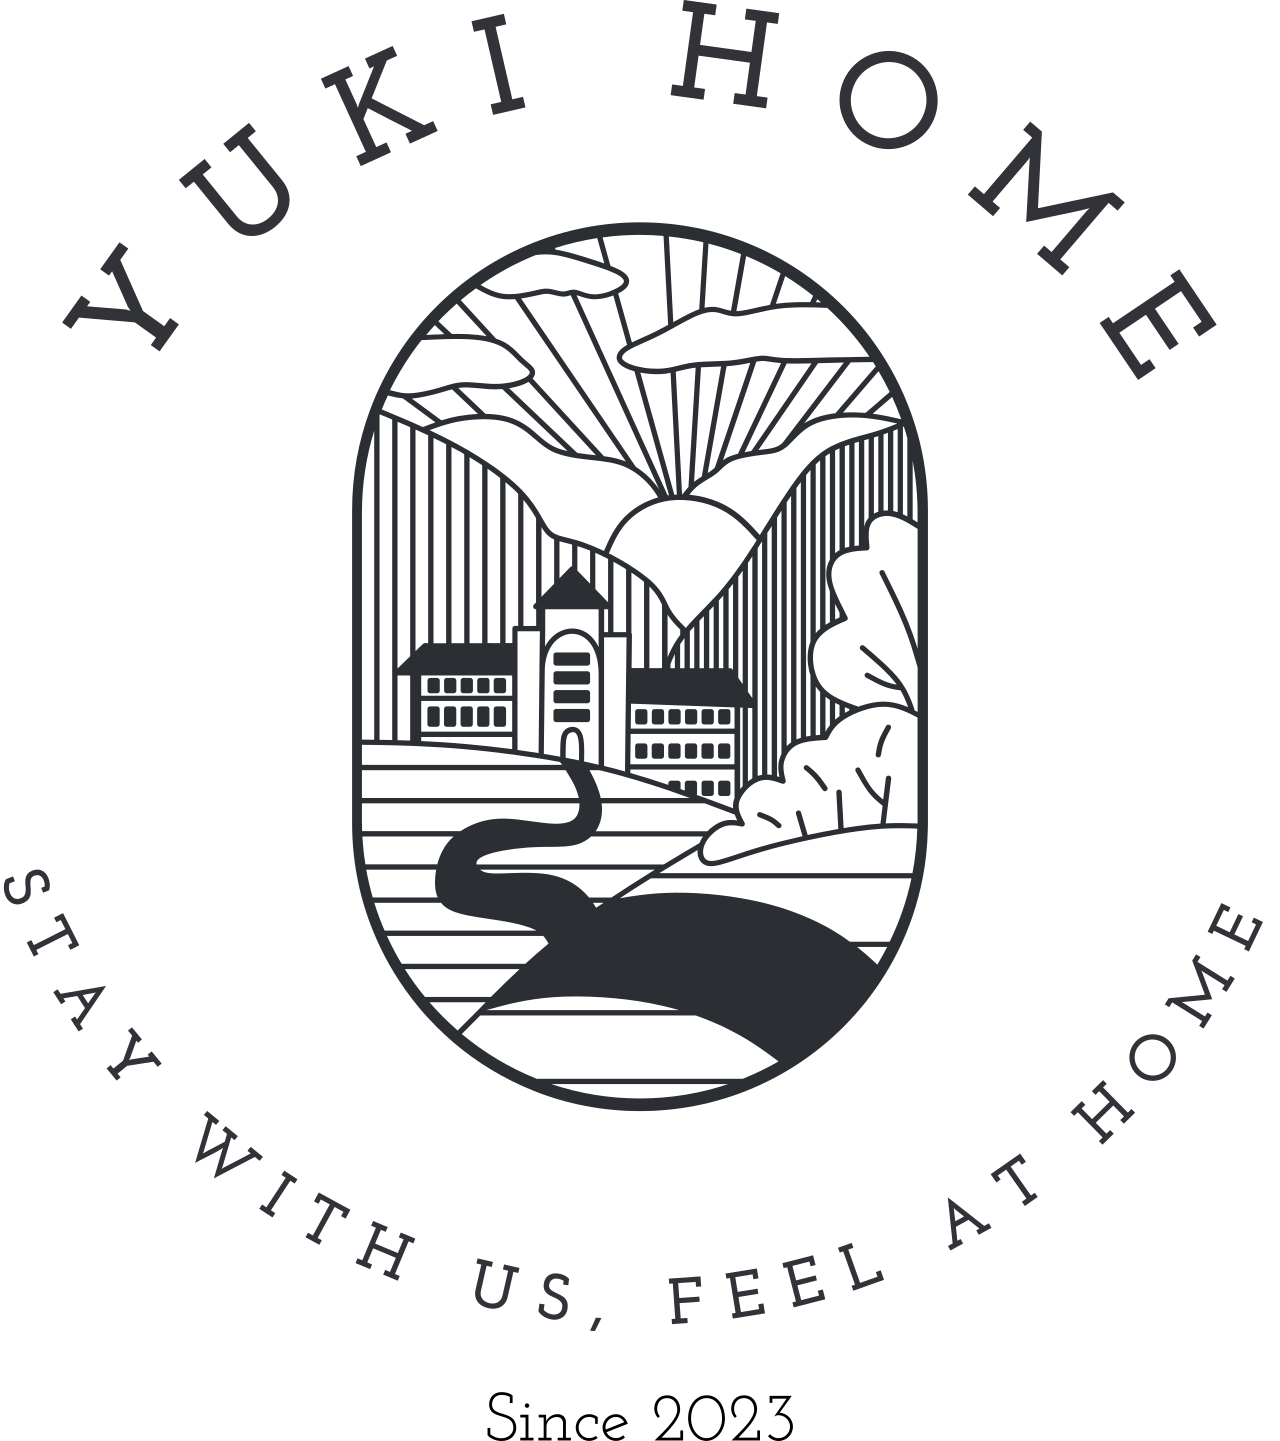 YUKI HOME's web page